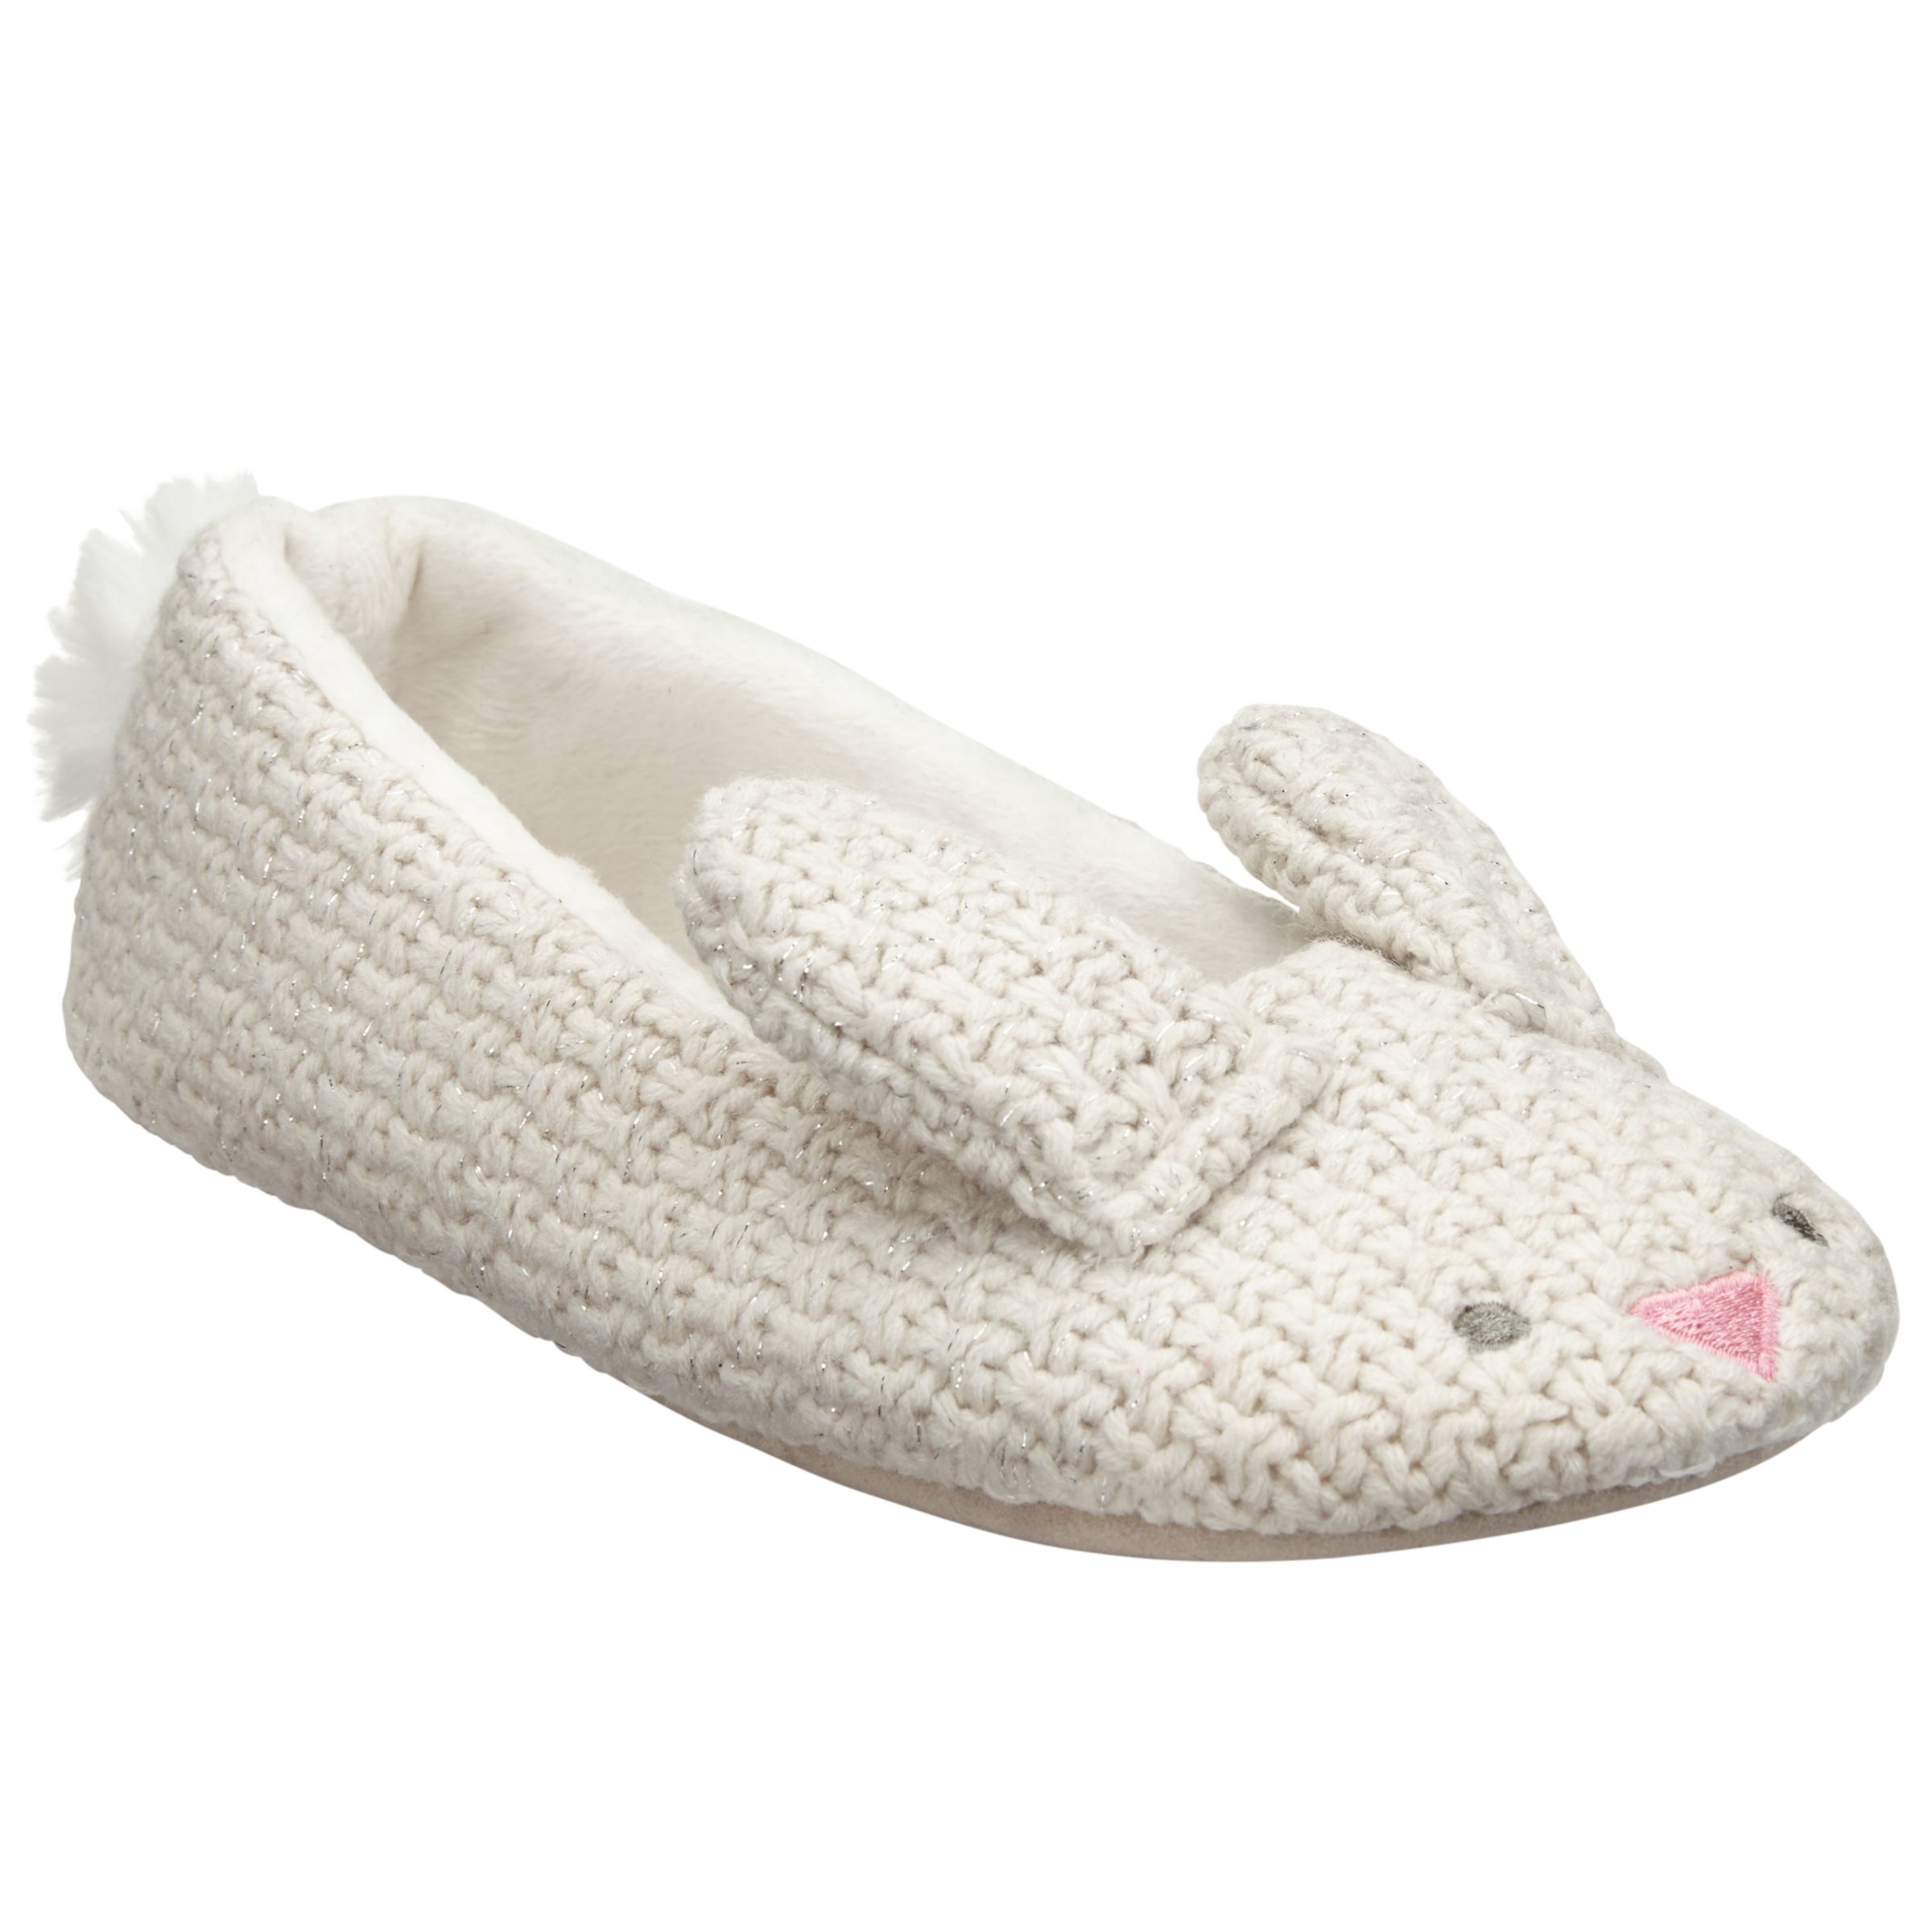 John Lewis & Partners Bunny Knitted Ballet Slippers, Cream, 3-4